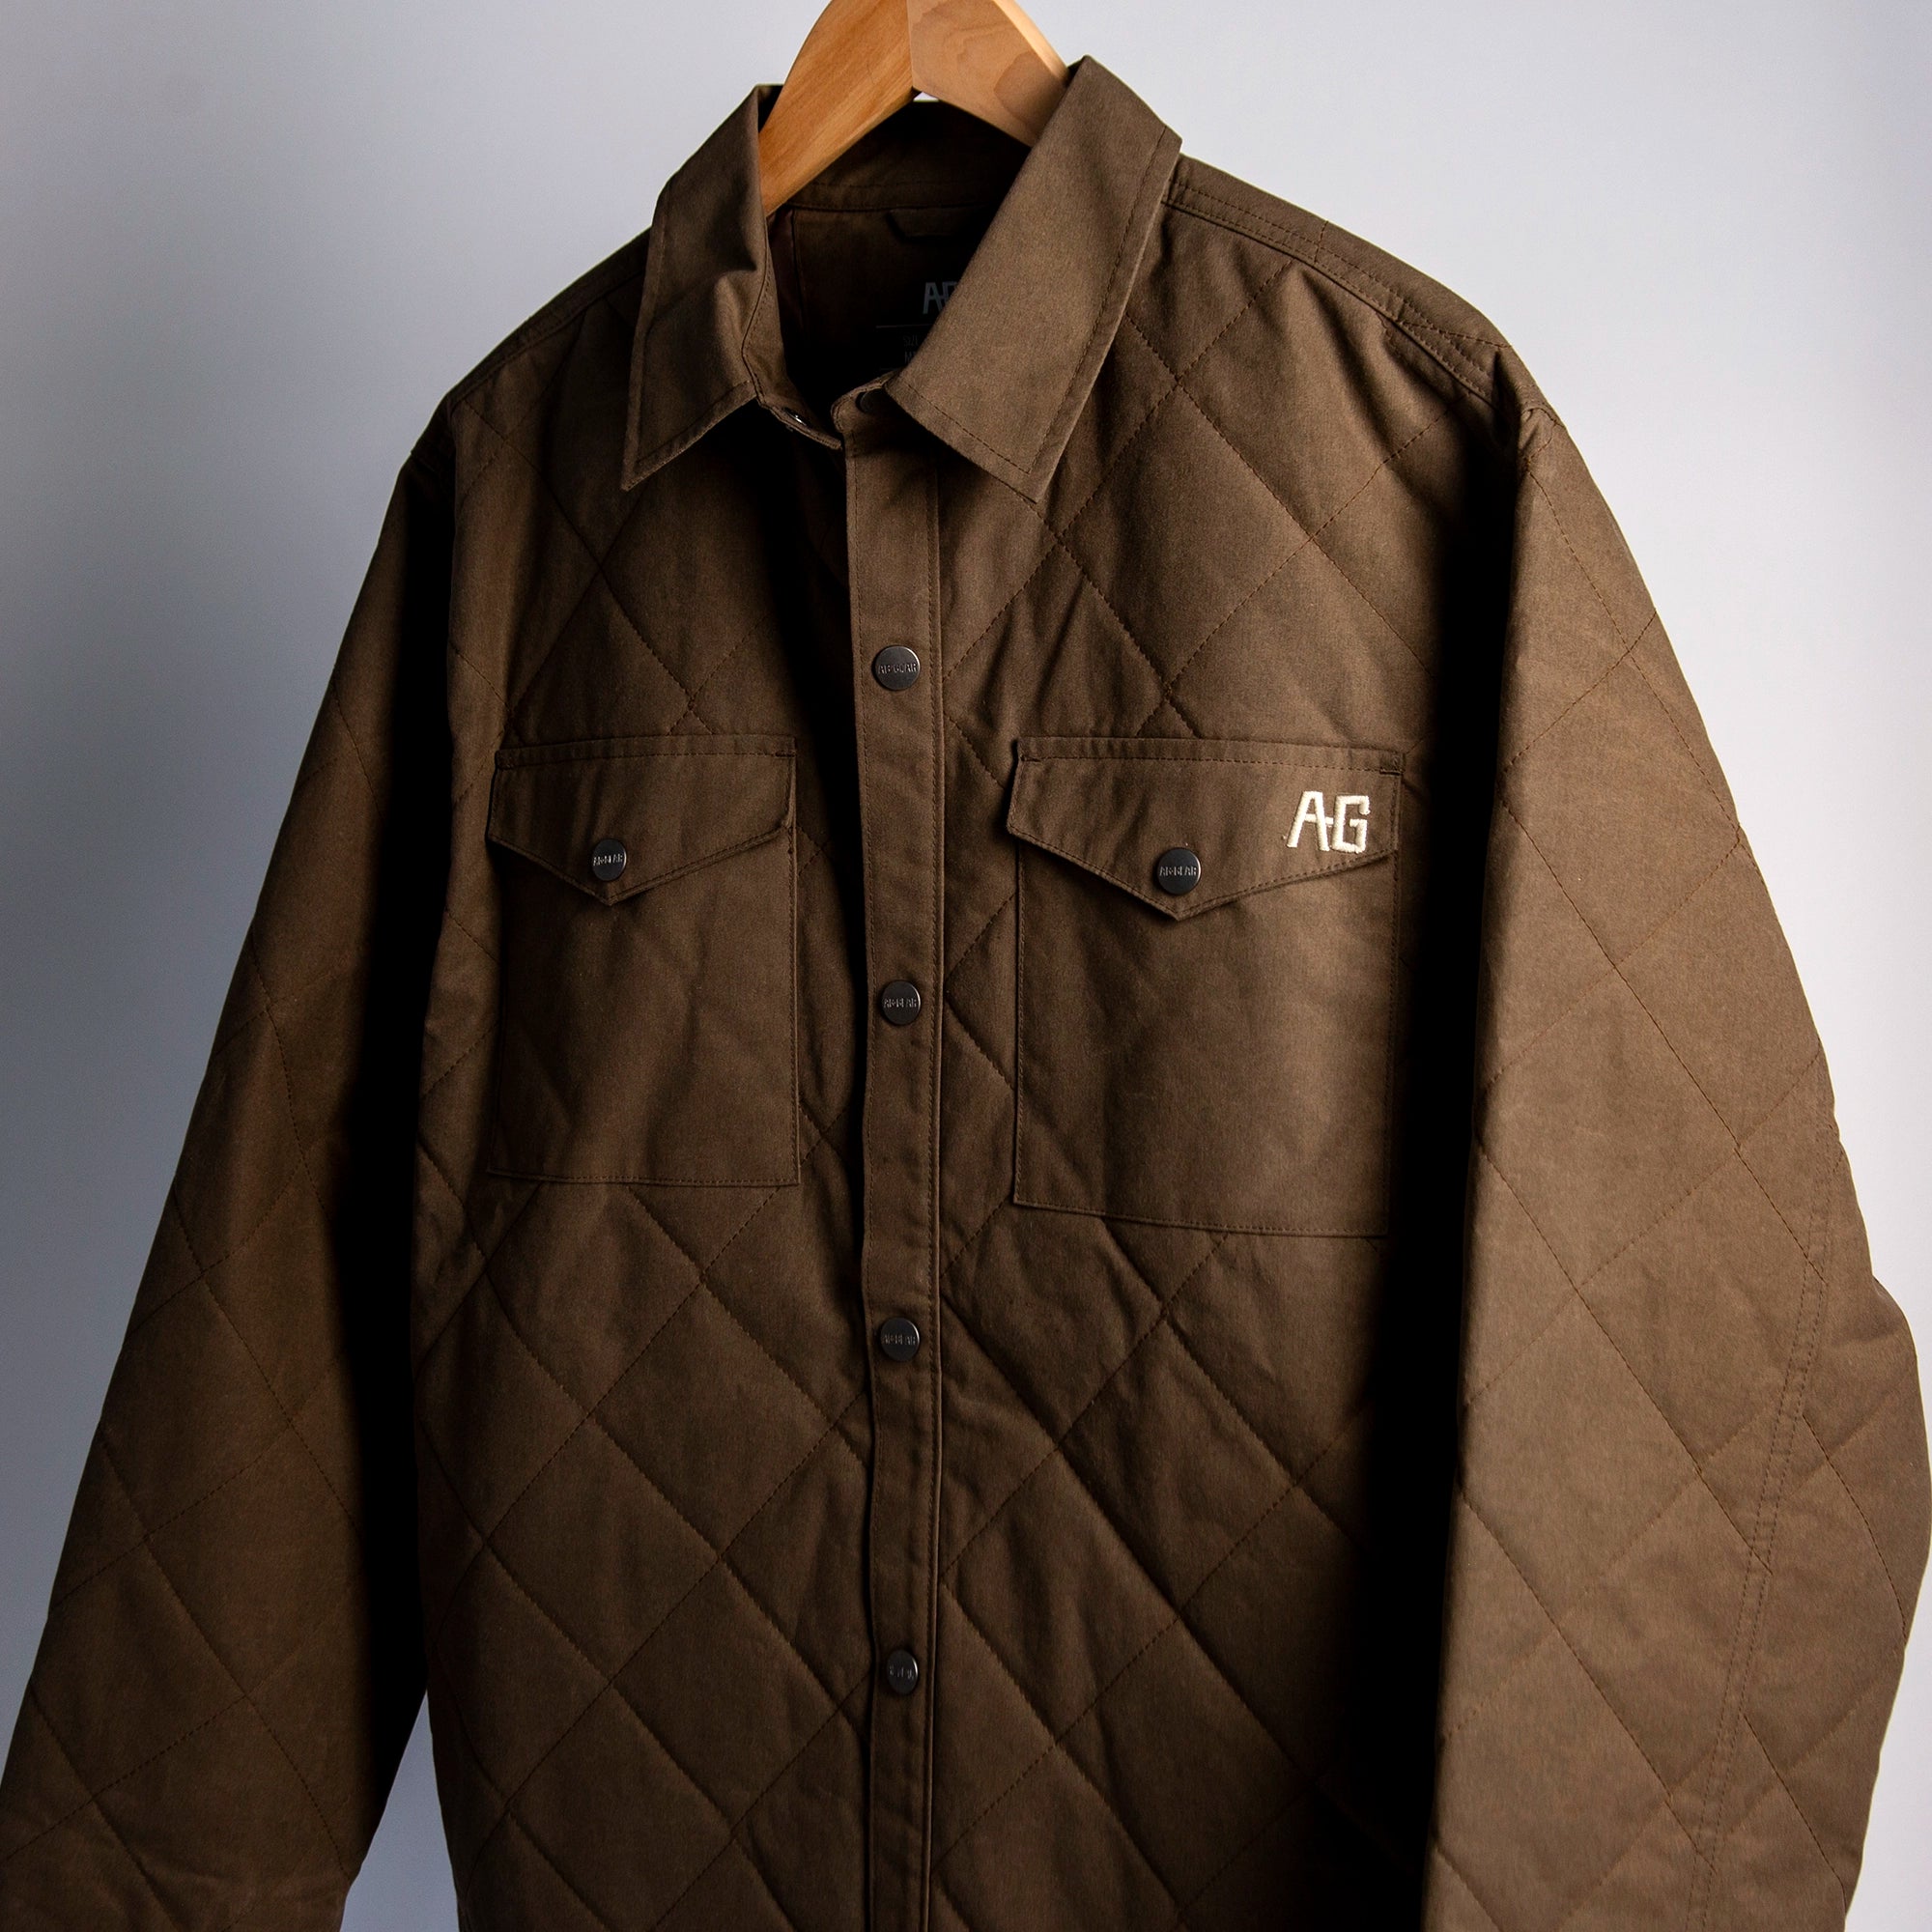 Dillinger waxed cotton field jacket classic farm jacket ranch jacket